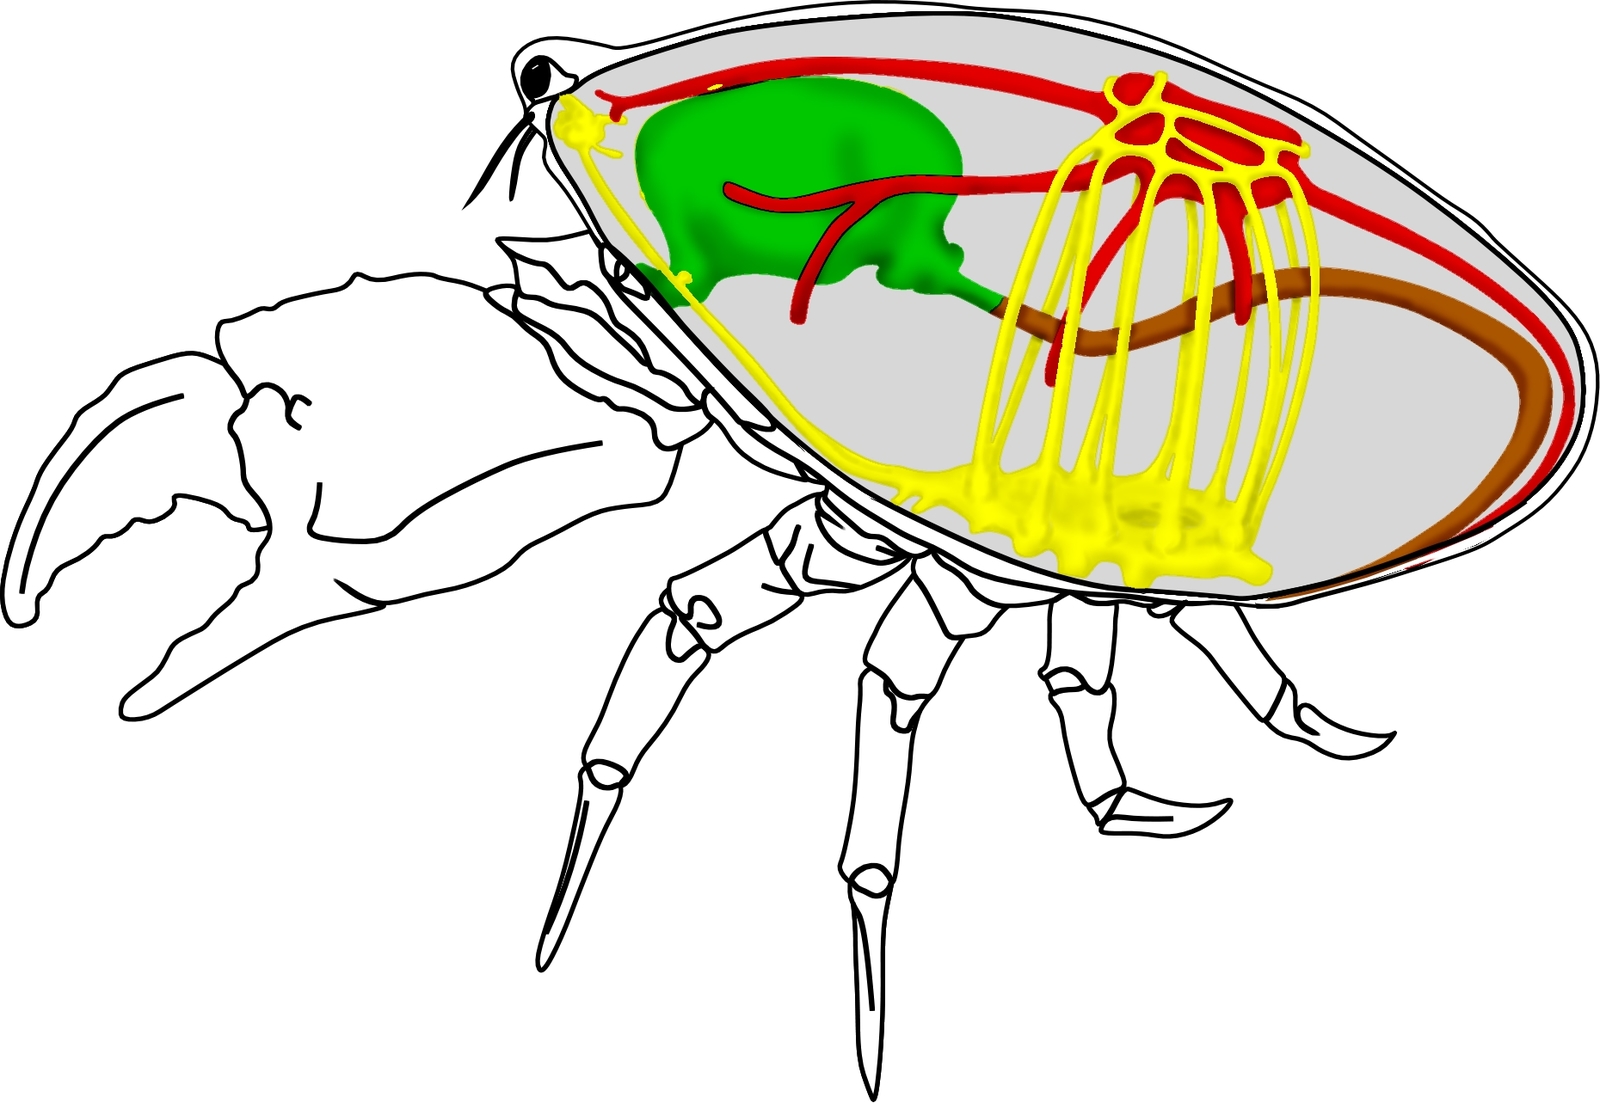 Органы крабов. Нервная система краба. Нервная система краба-паука. Анатомия краба. Нервная система паукообразных.